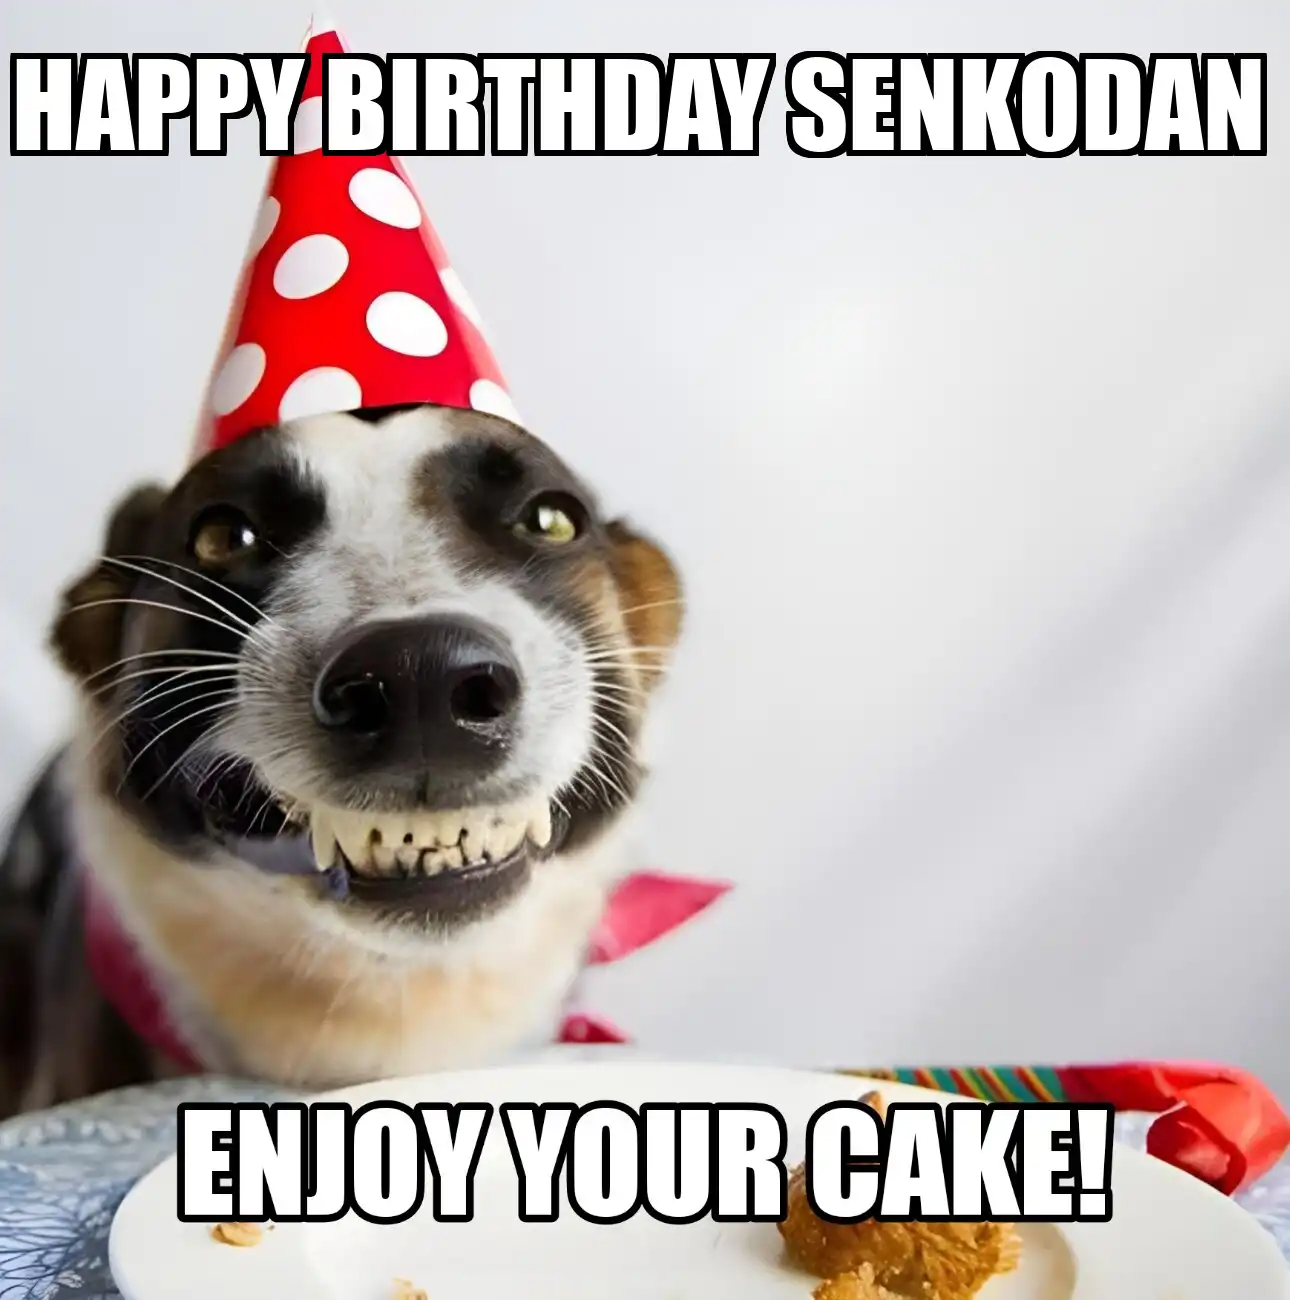 Happy Birthday Senkodan Enjoy Your Cake Dog Meme